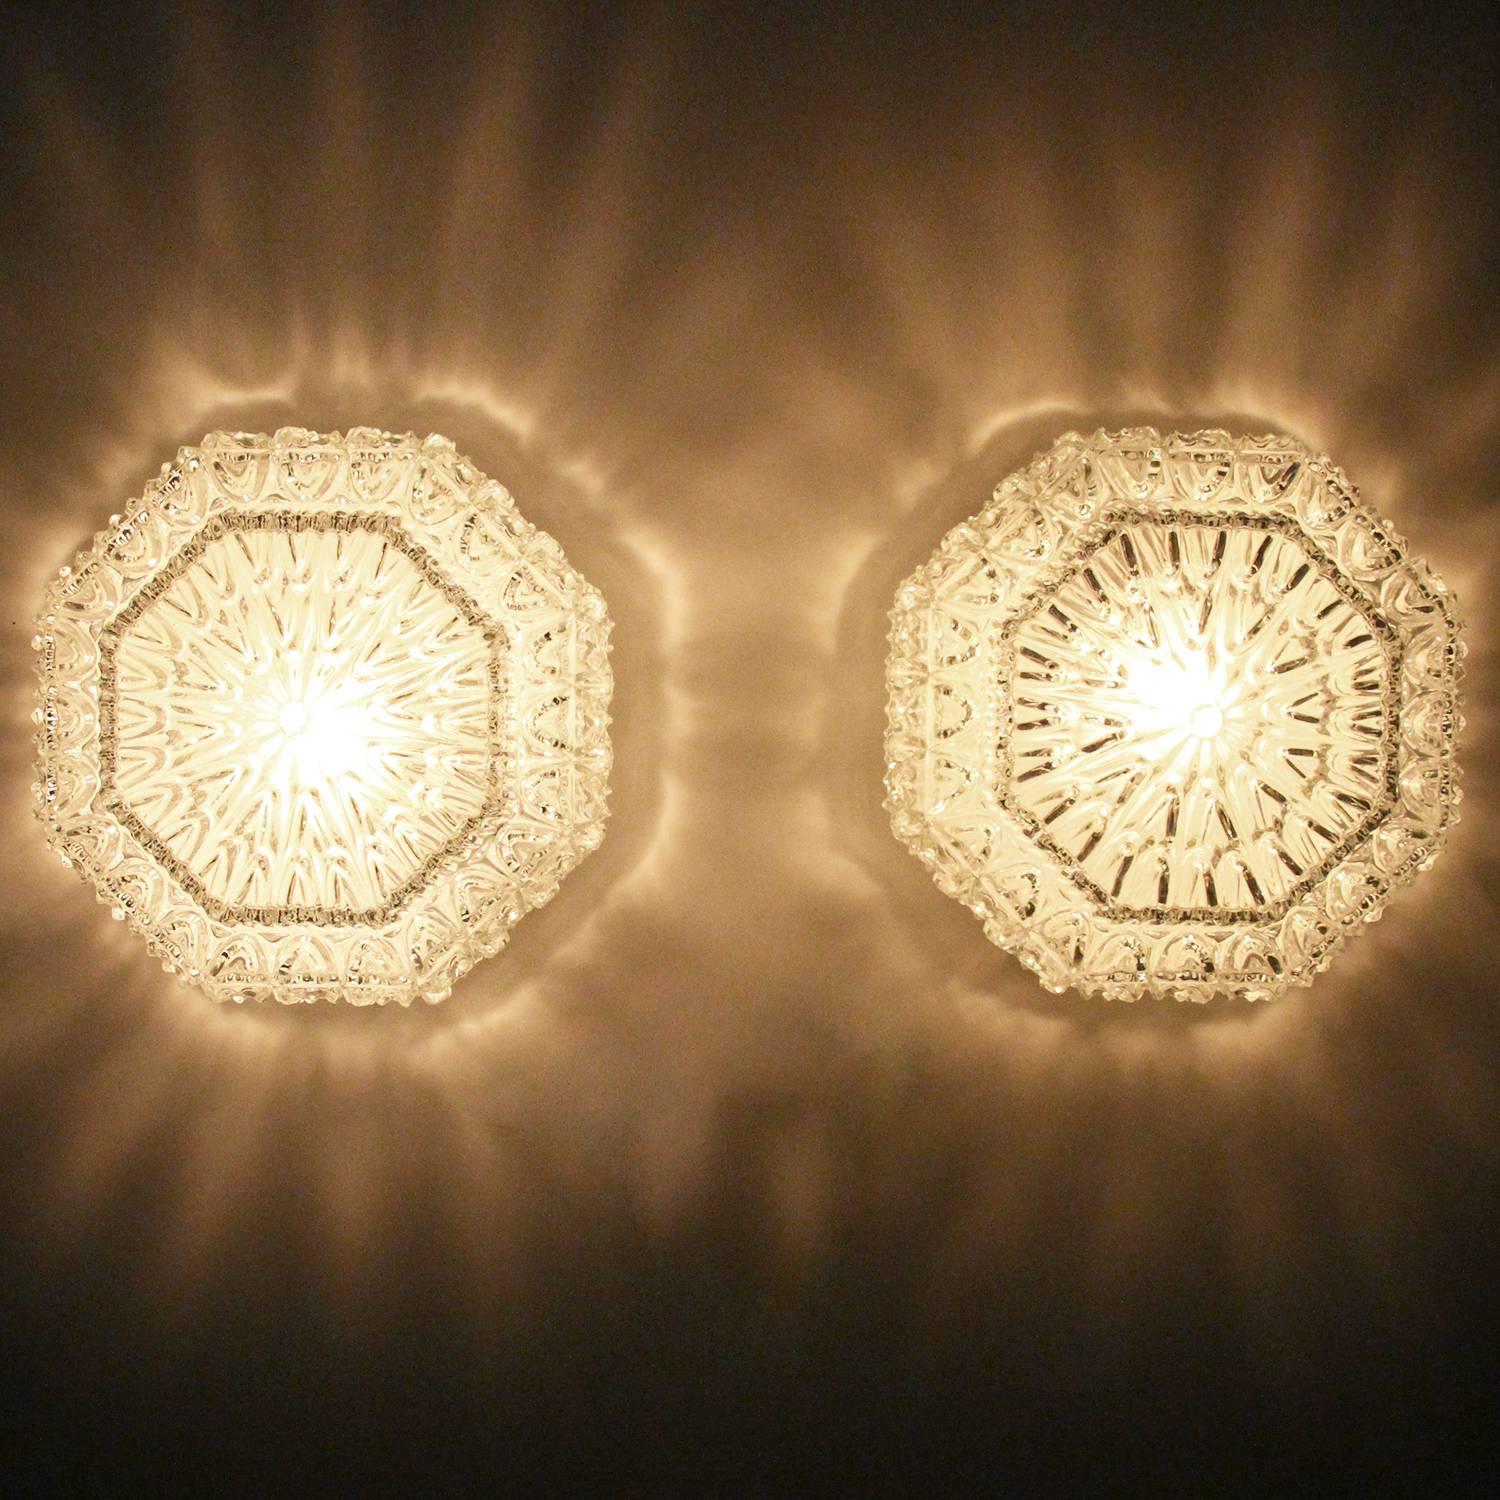 20th Century Pressed Glass Flush, Pair of Ceiling Flush Lights, 1960s Vintage Flush Lights